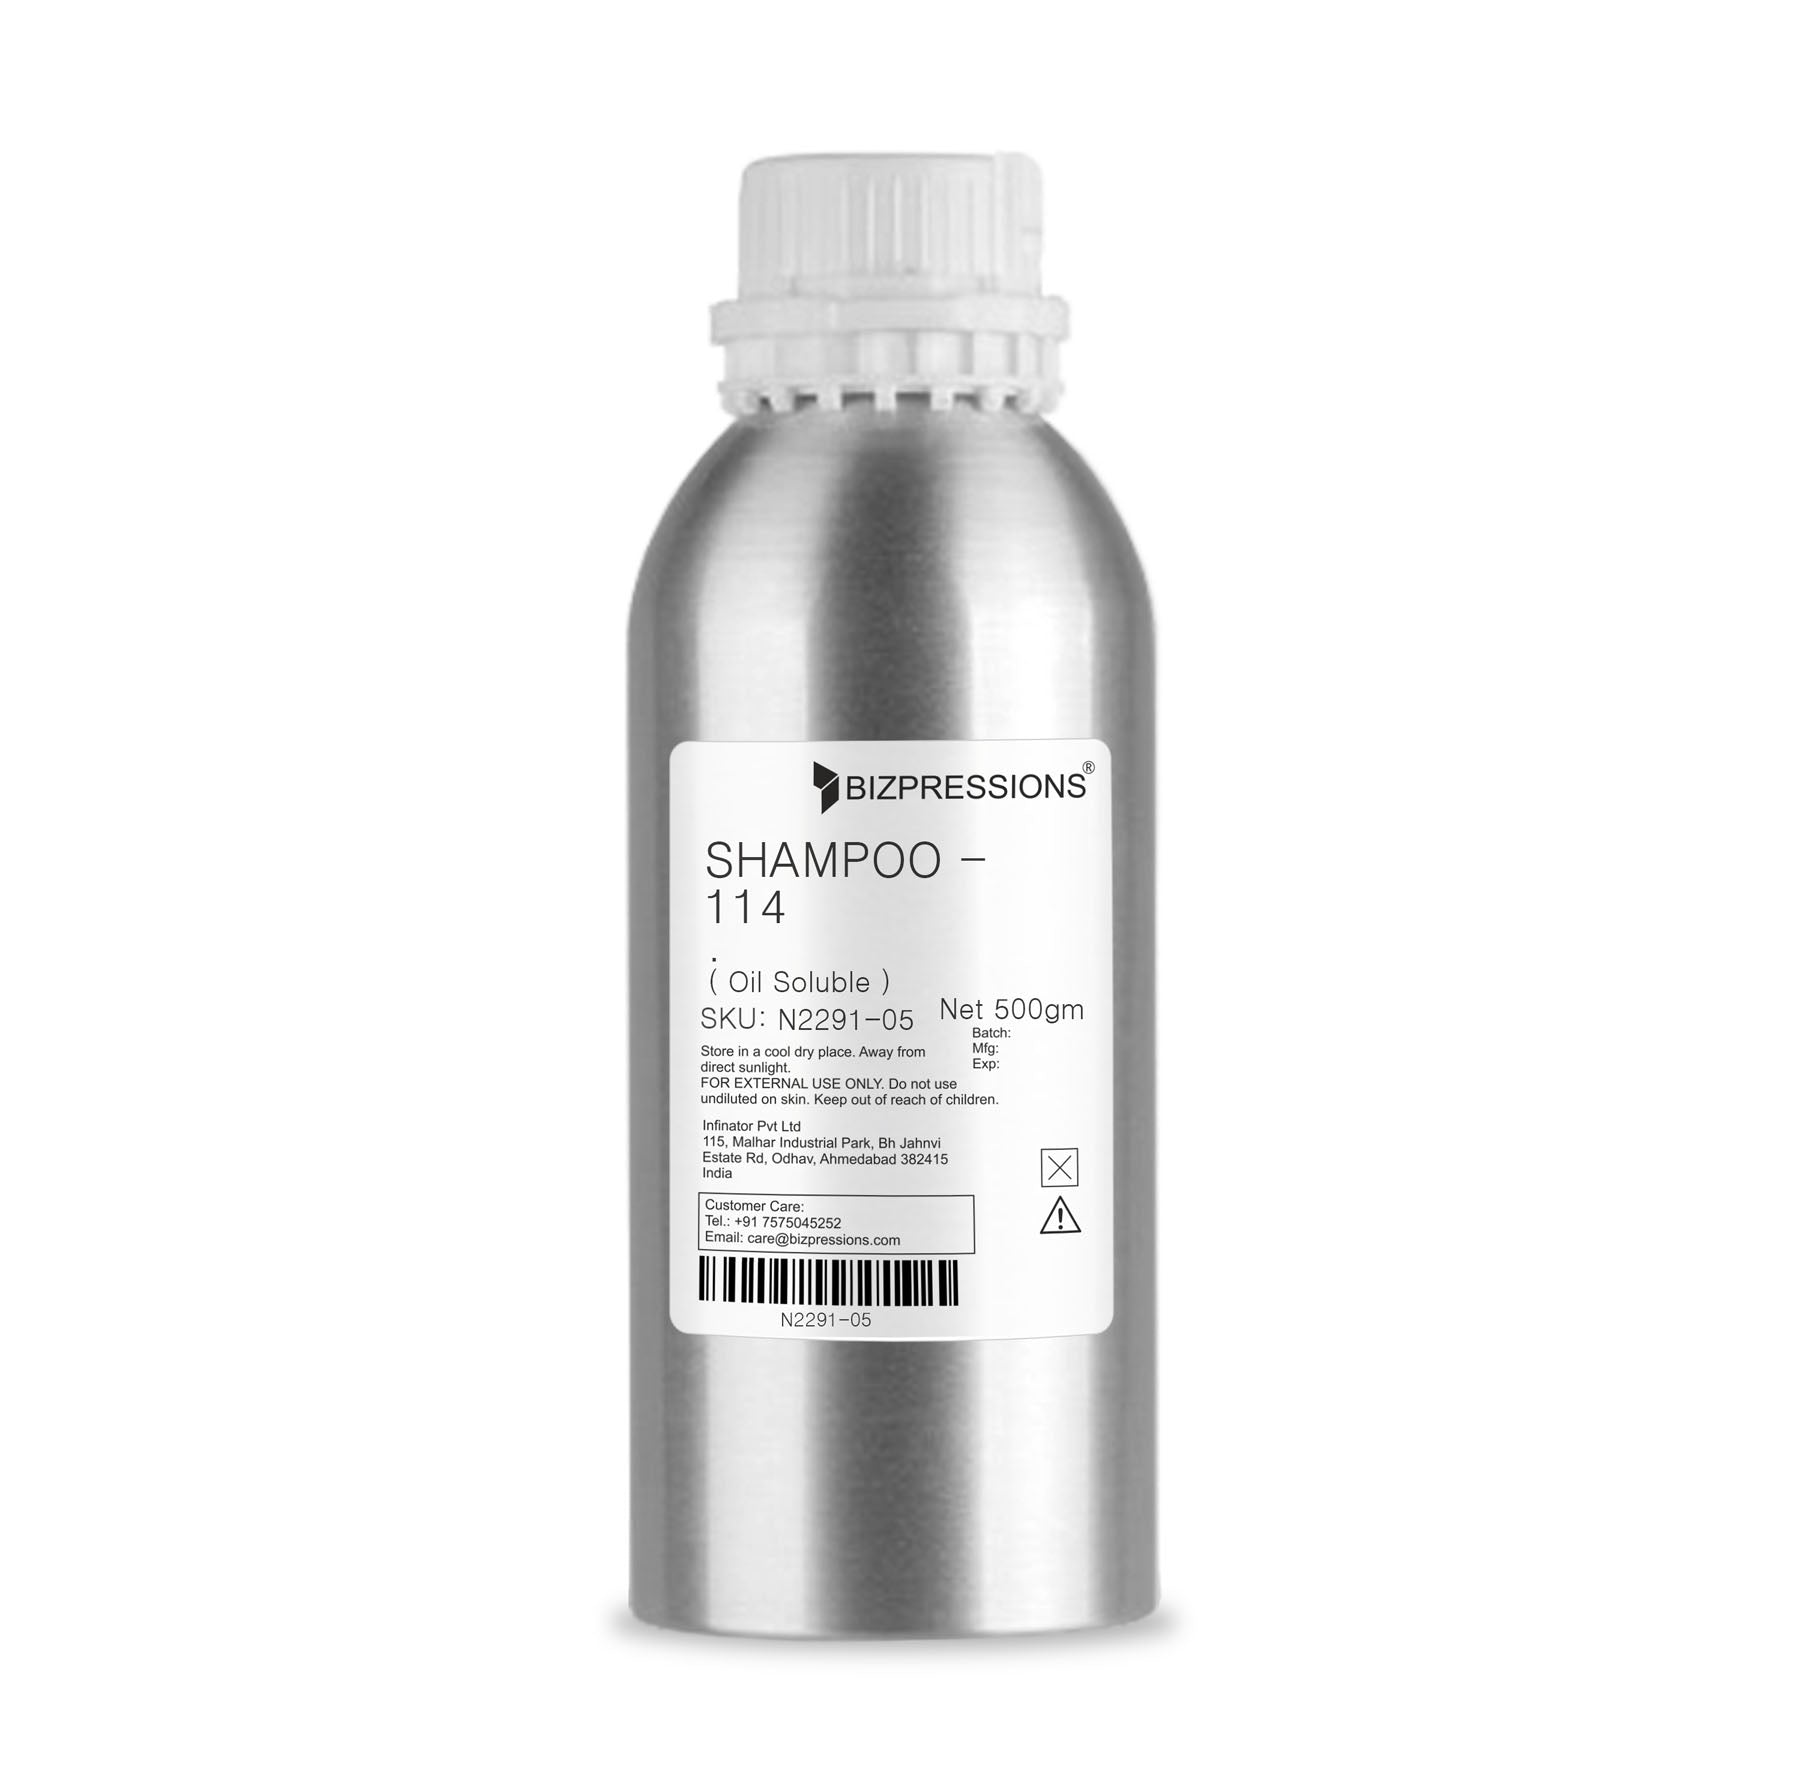 SHAMPOO - 114 - Fragrance ( Oil Soluble ) - 500 gm